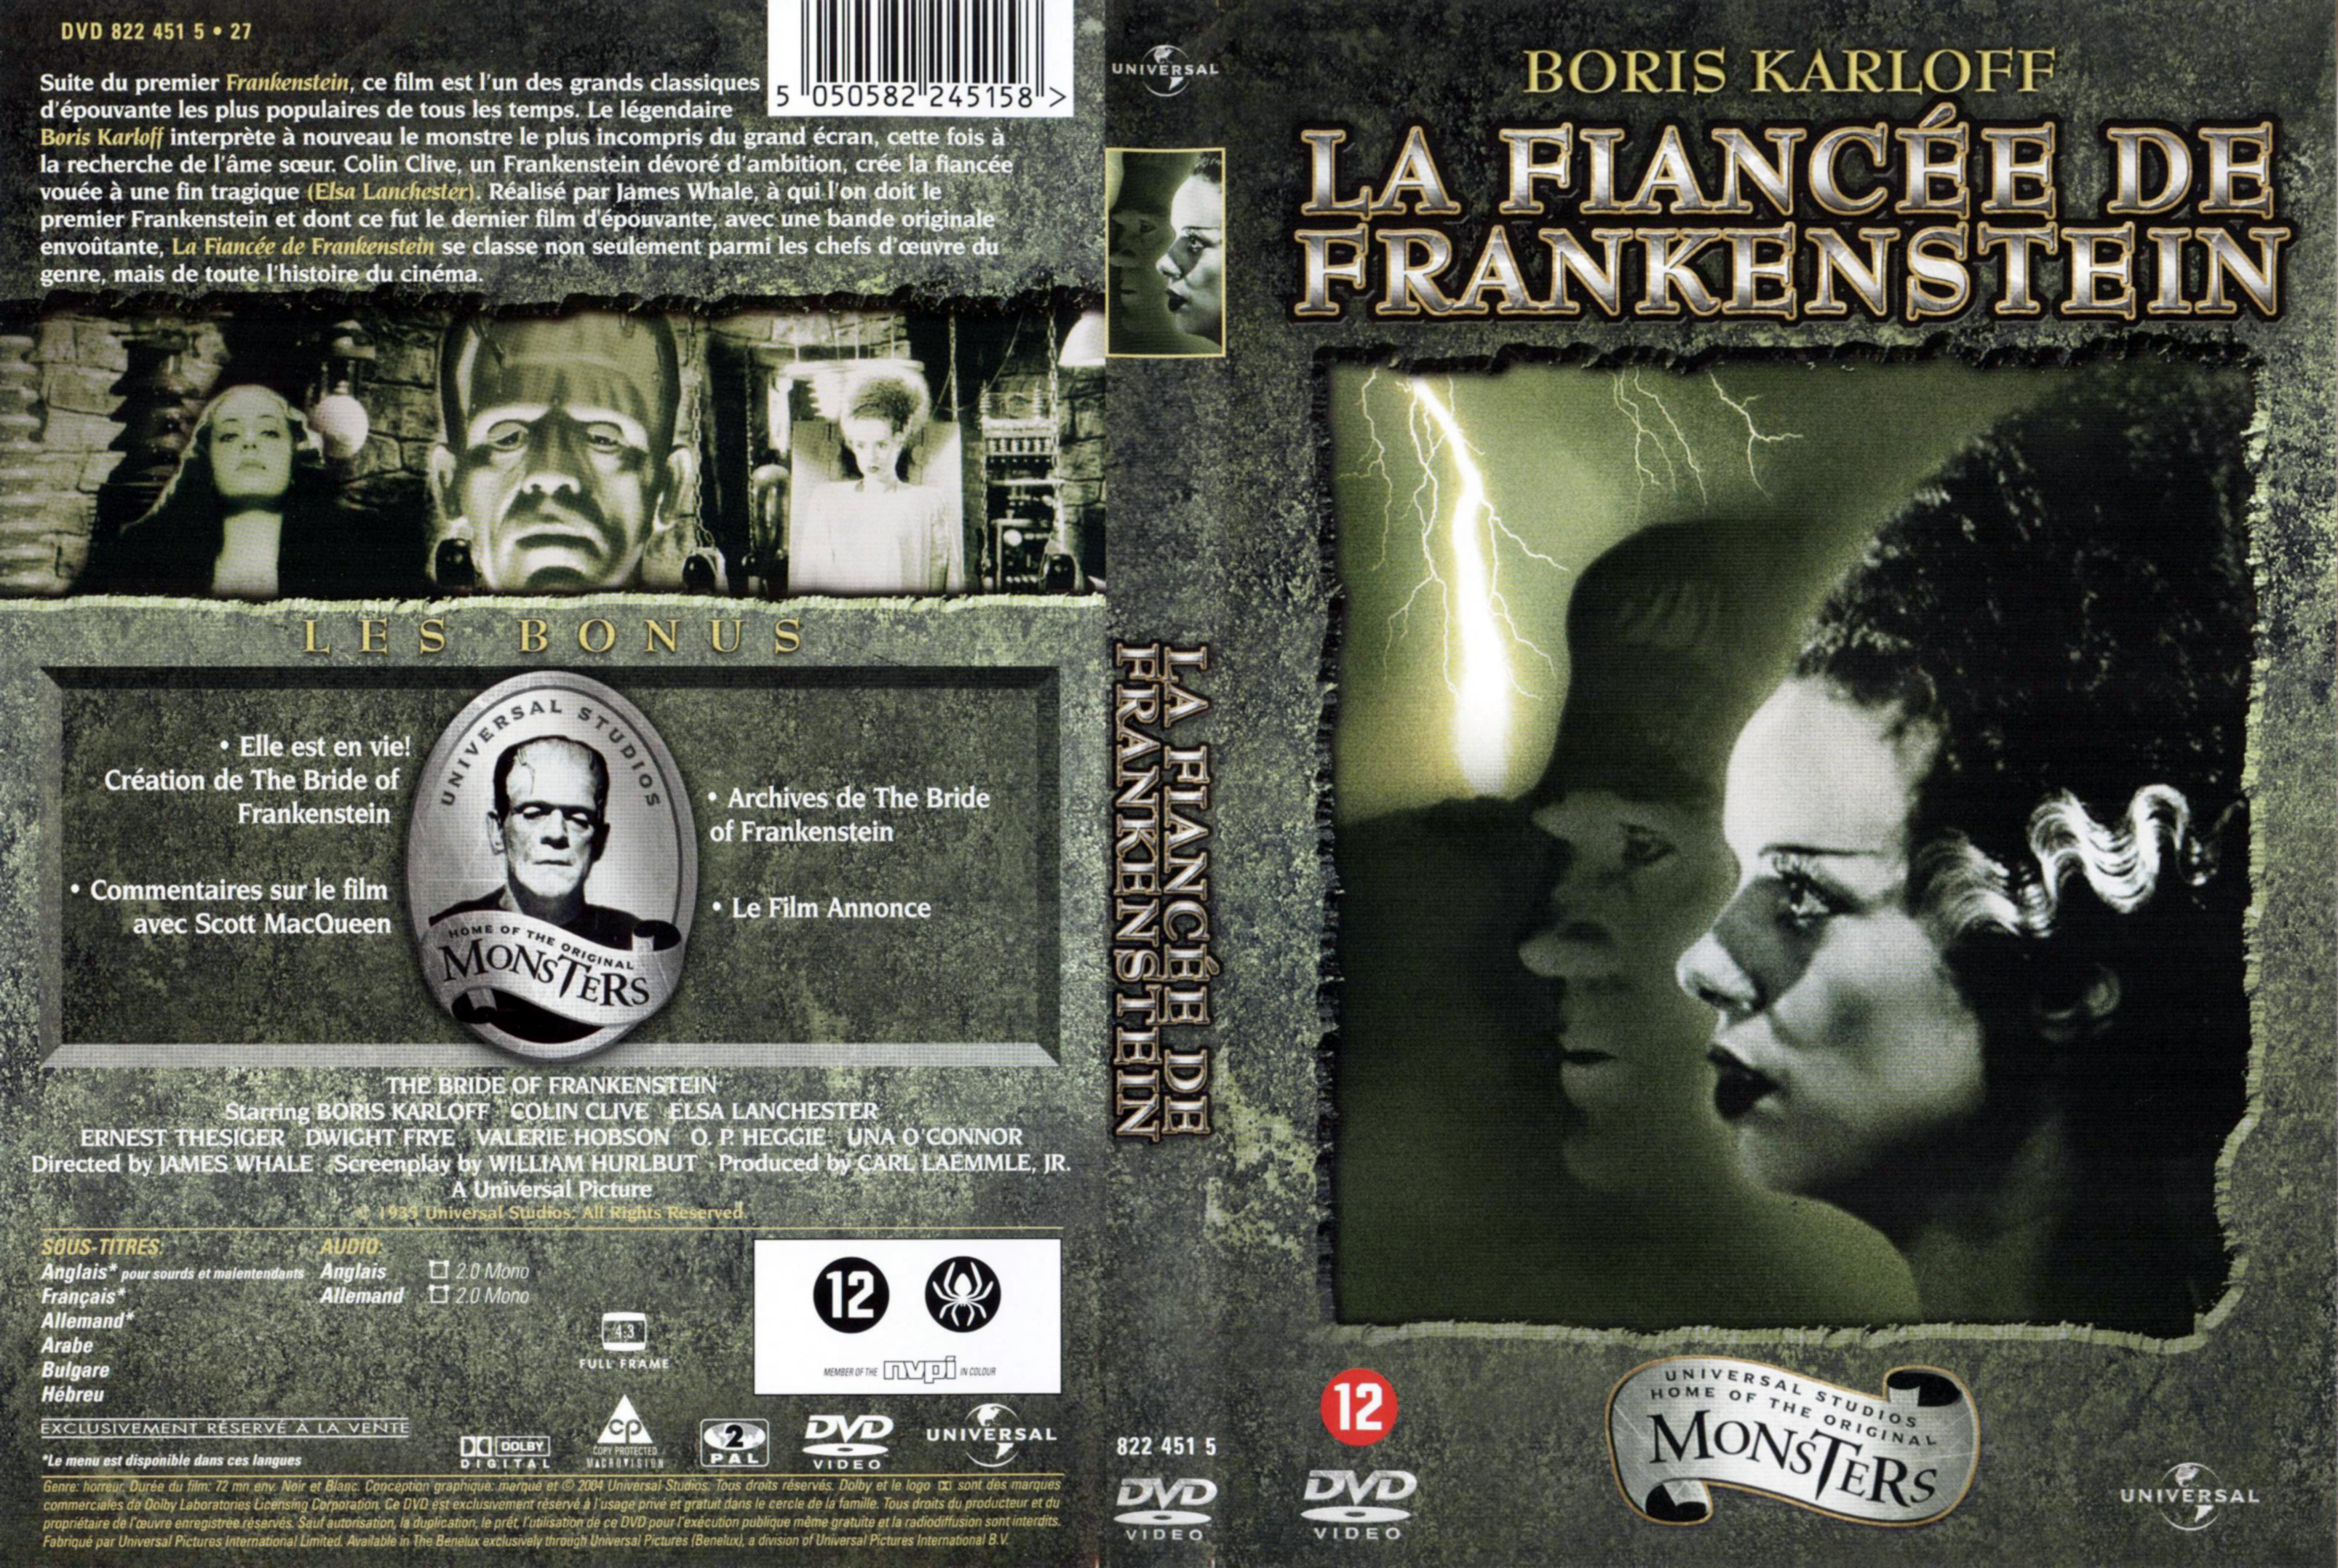 Jaquette DVD La fiance de Frankenstein